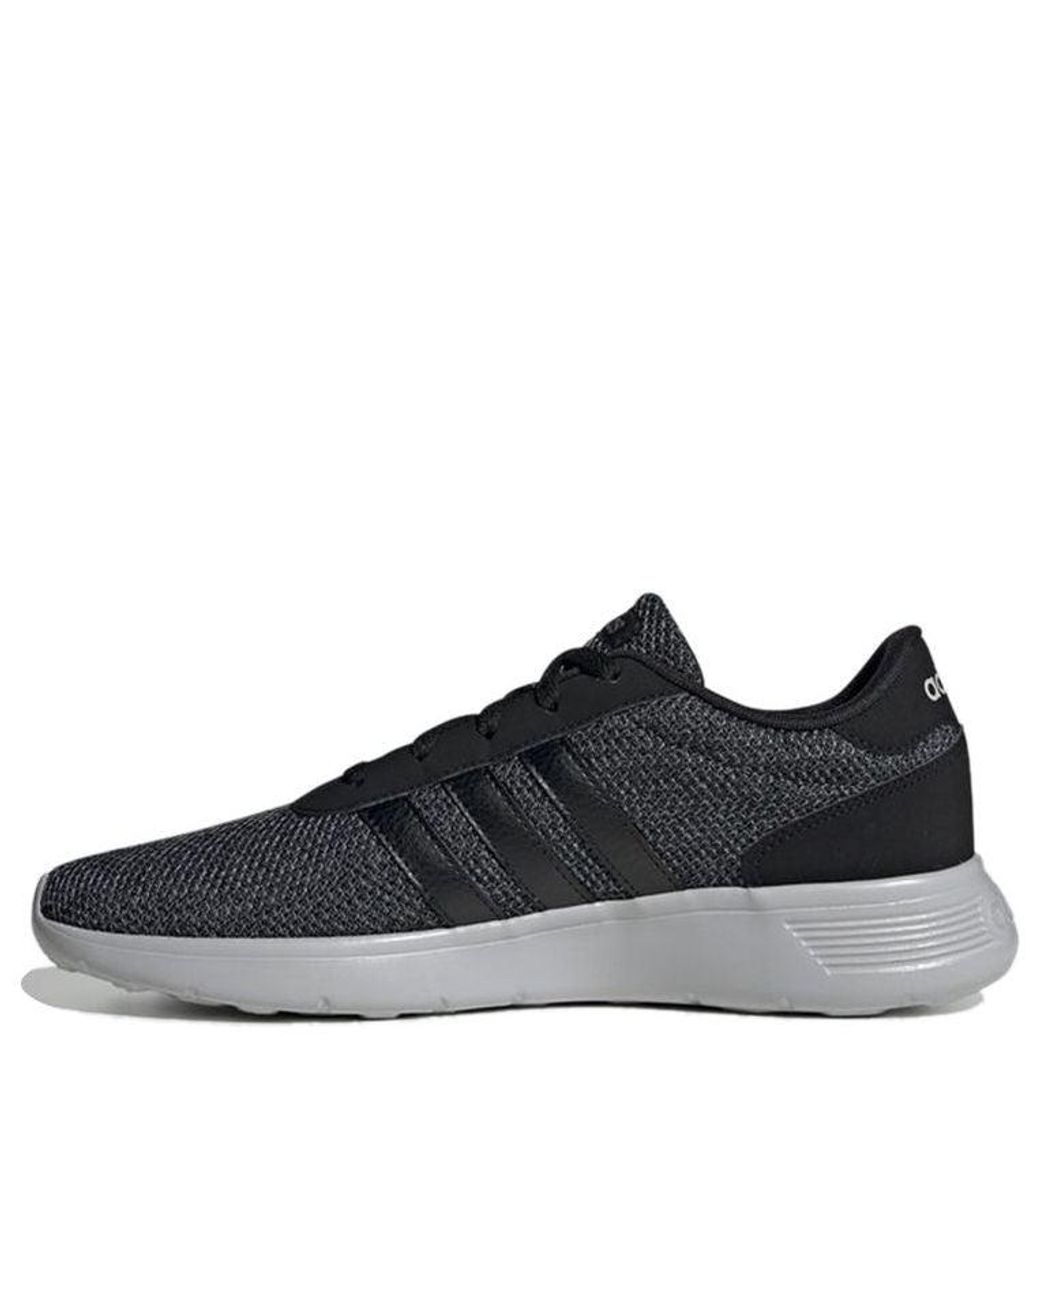 Adidas Neo Racer Black/grey Men | Lyst